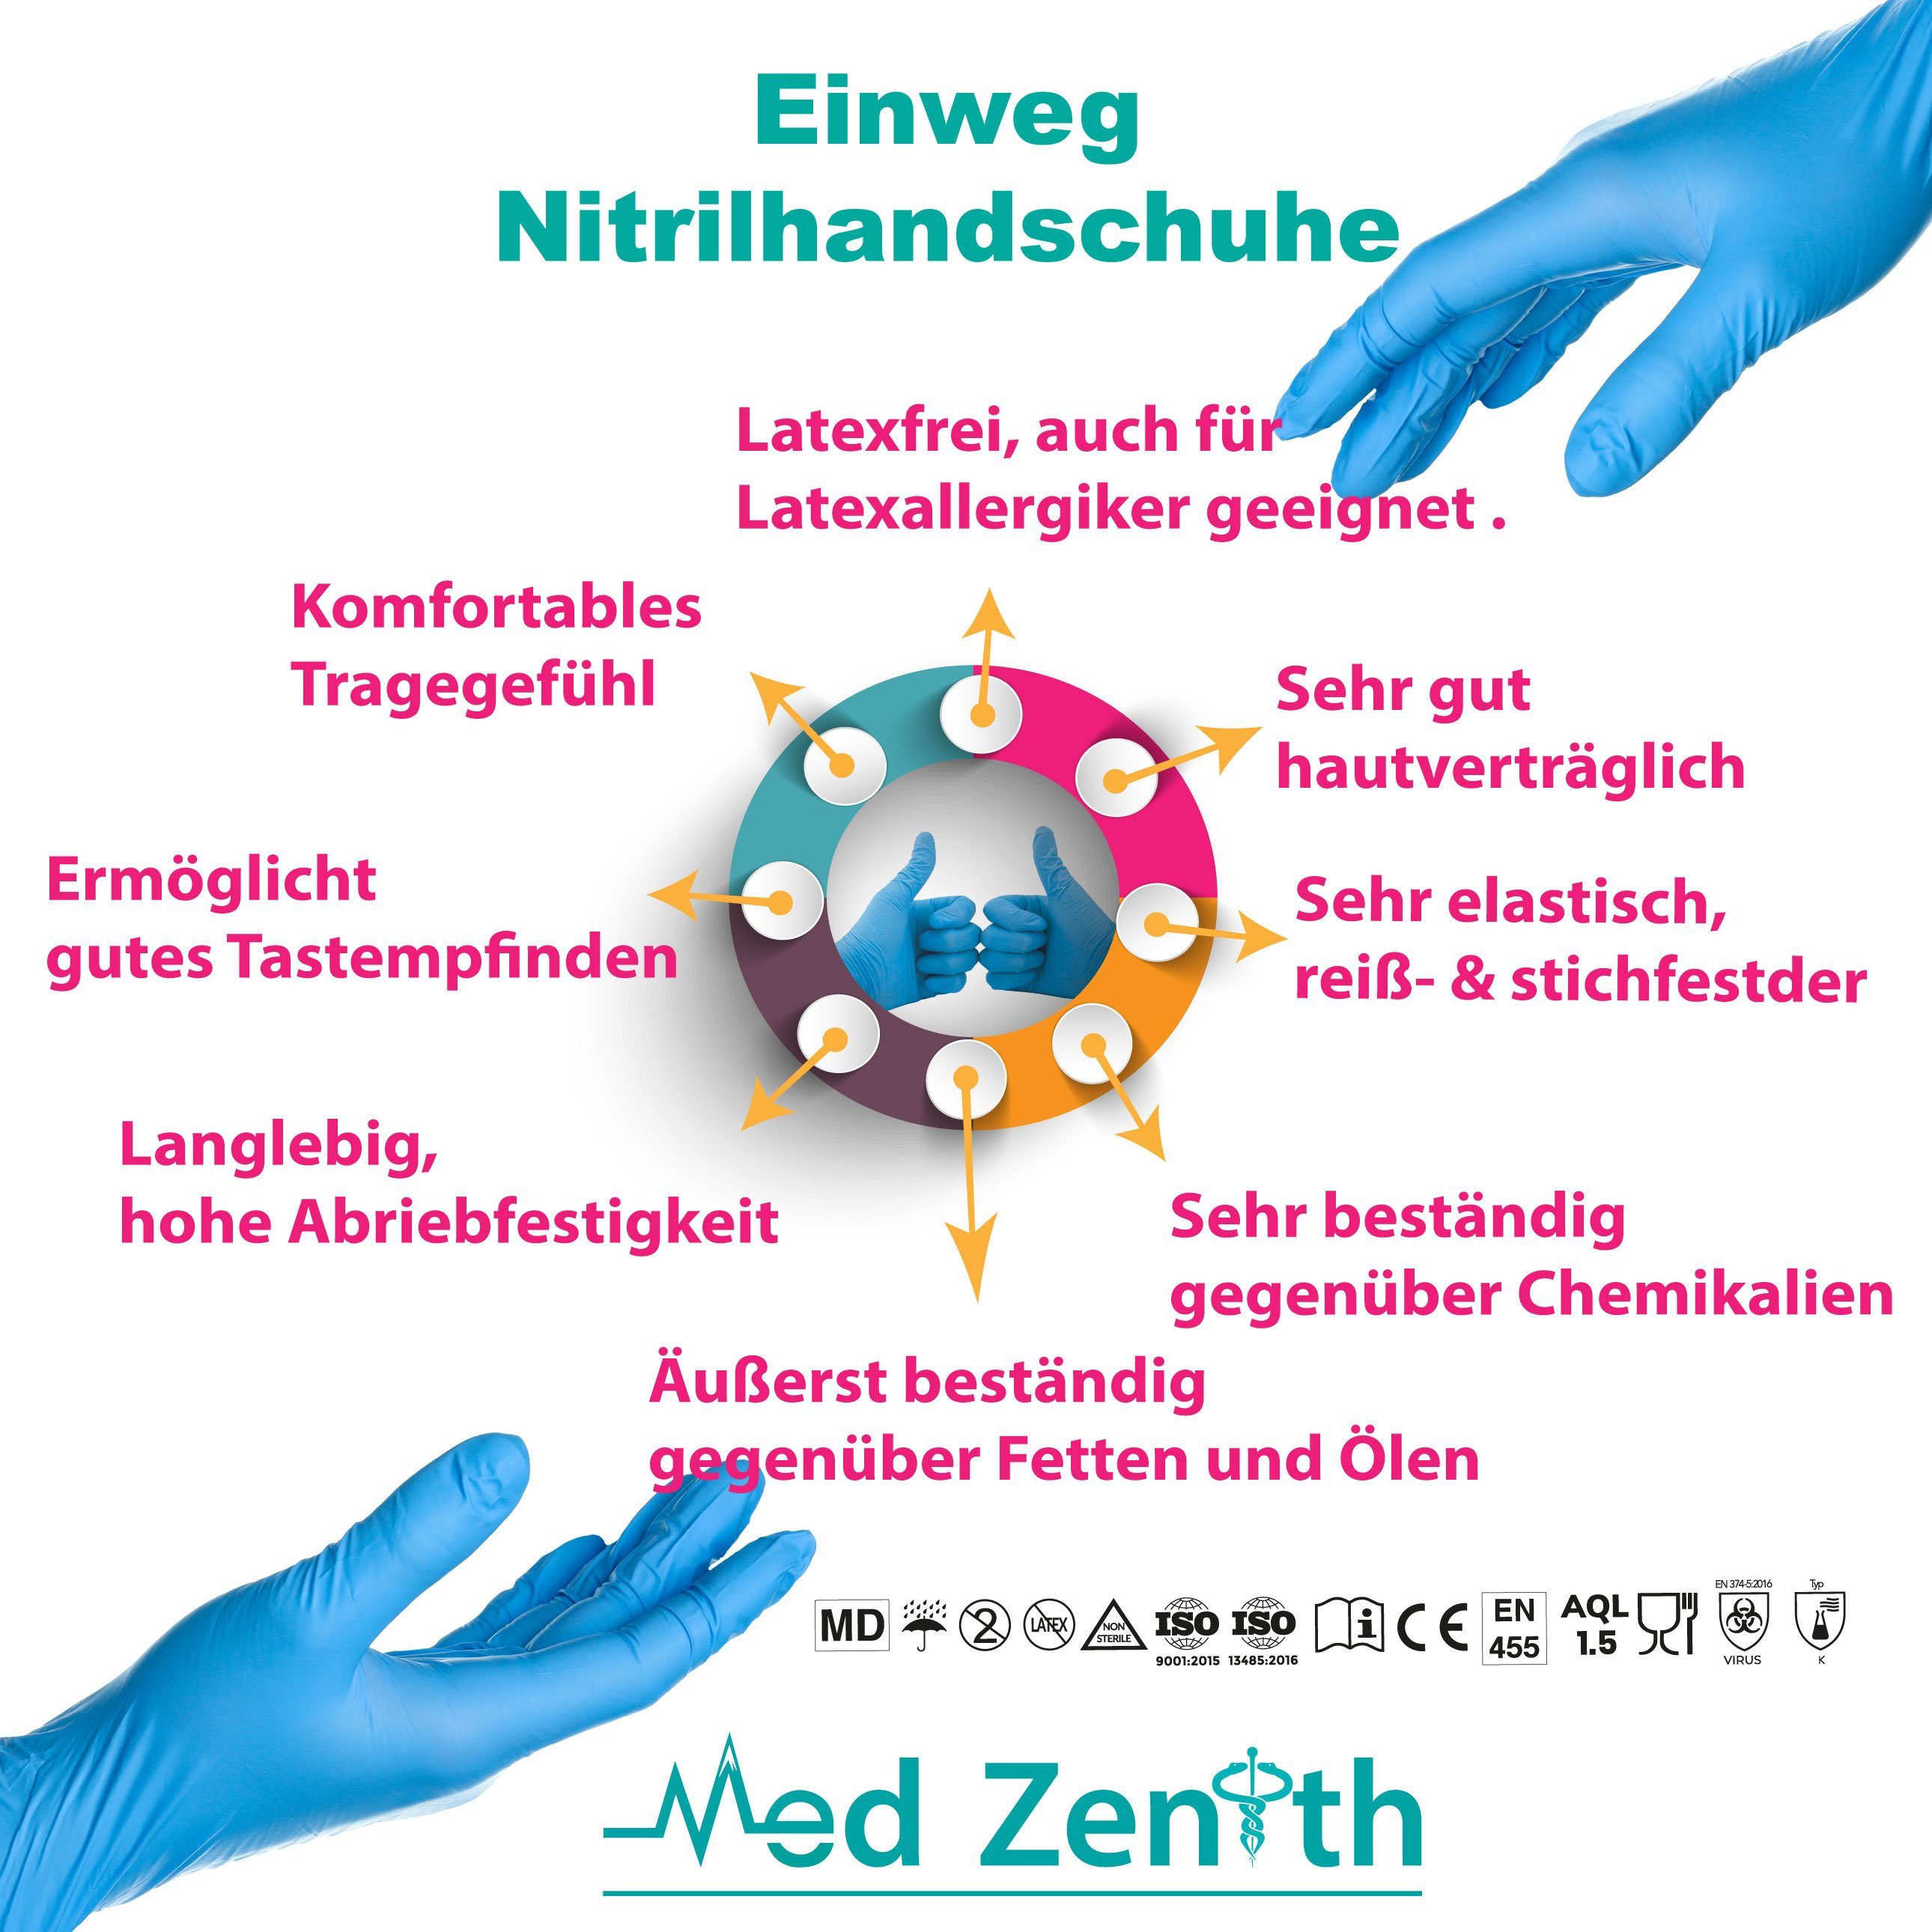 Medical Zenith M-L Stück, (1000 Nitril-Handschuhe Größe Gummihandschuhe) Einmalhandschuhe Med